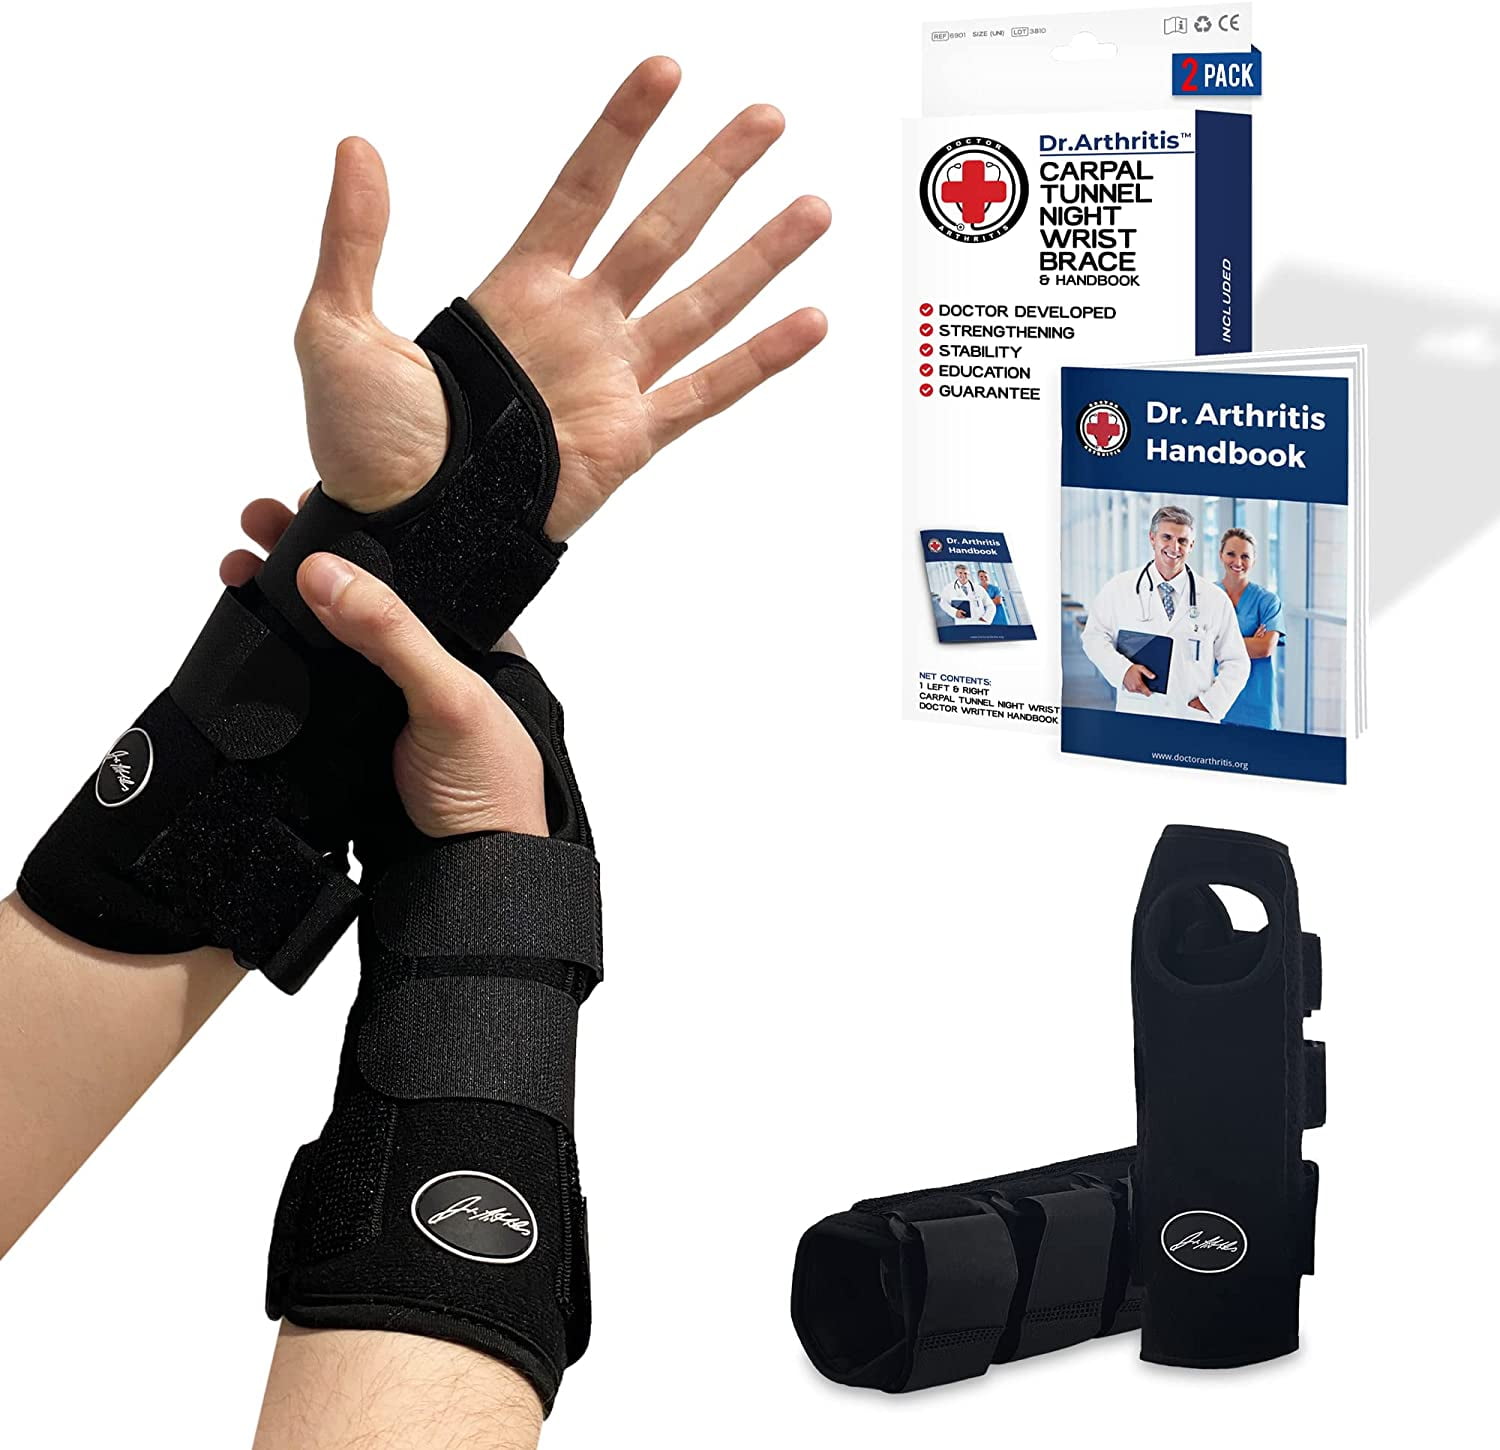 Doctor Developed Carpal Tunnel Wrist Brace for Night Support, Wrist Brace  for Carpal Tunnel with Wrist Splint, Sleep Brace for Sprained Wrist, F.D.A  Medical Device & Handbook (2-Pack) 